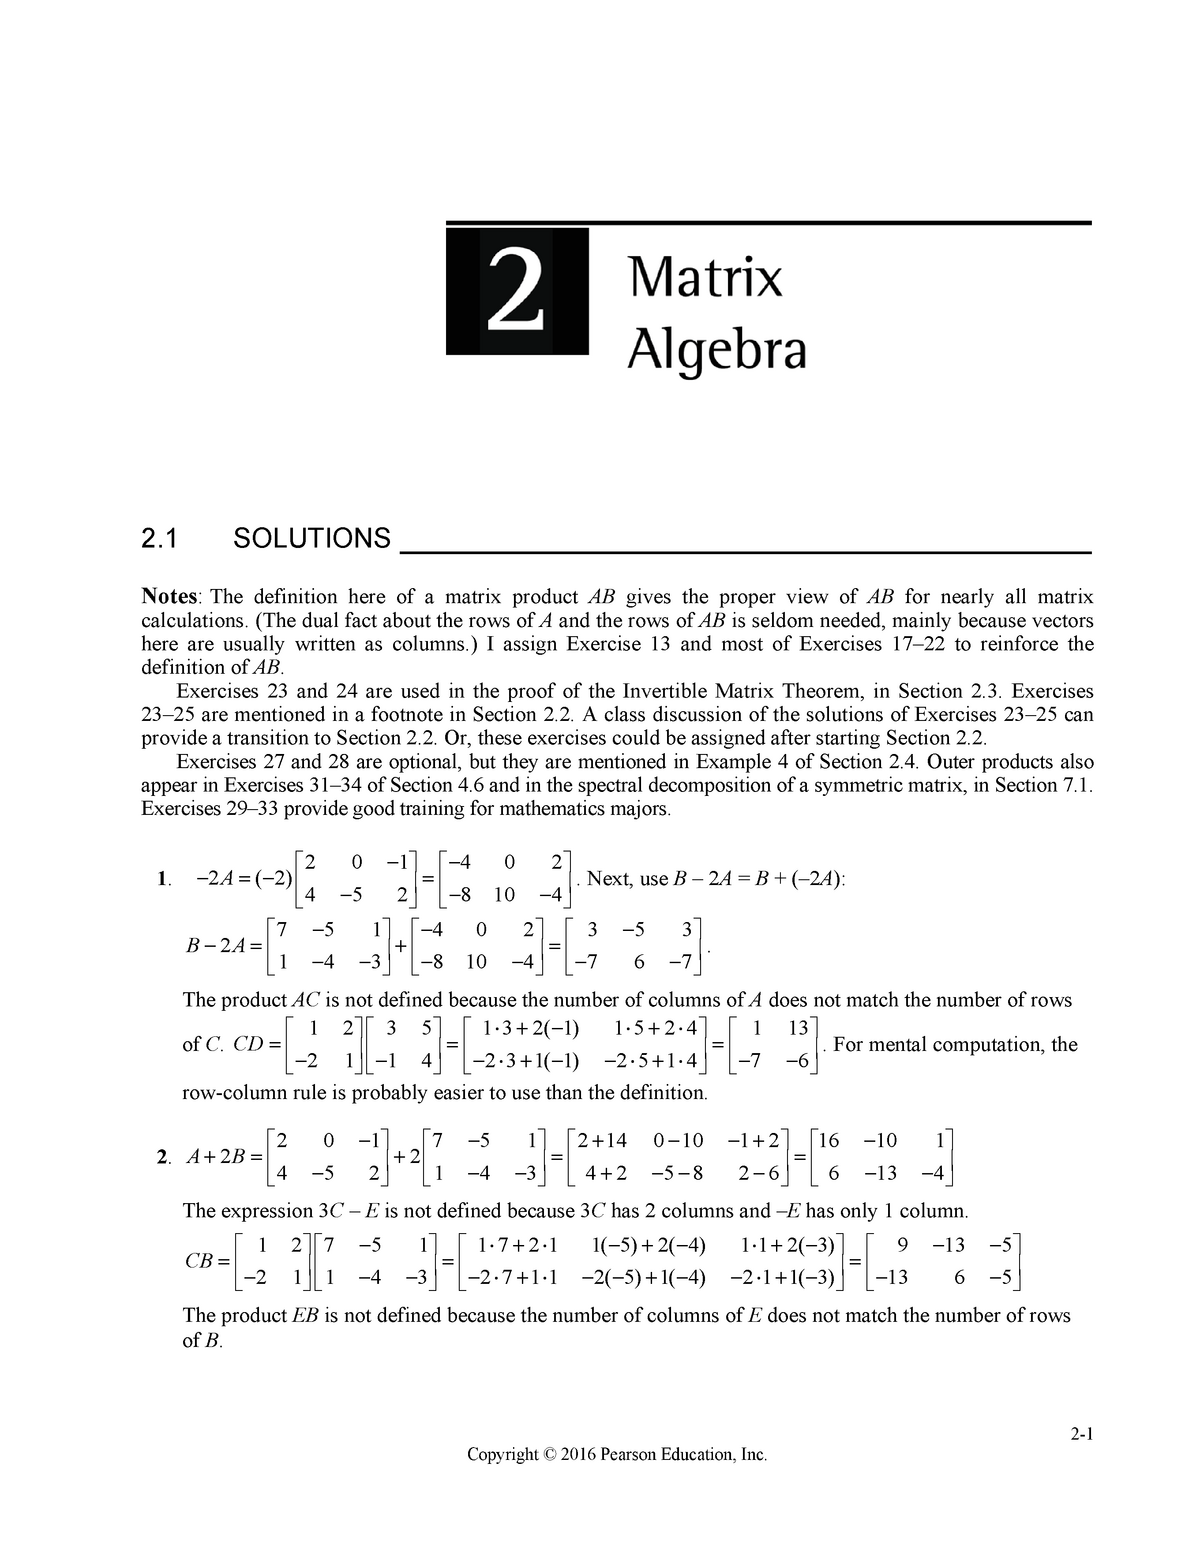 phd thesis on numerical linear algebra